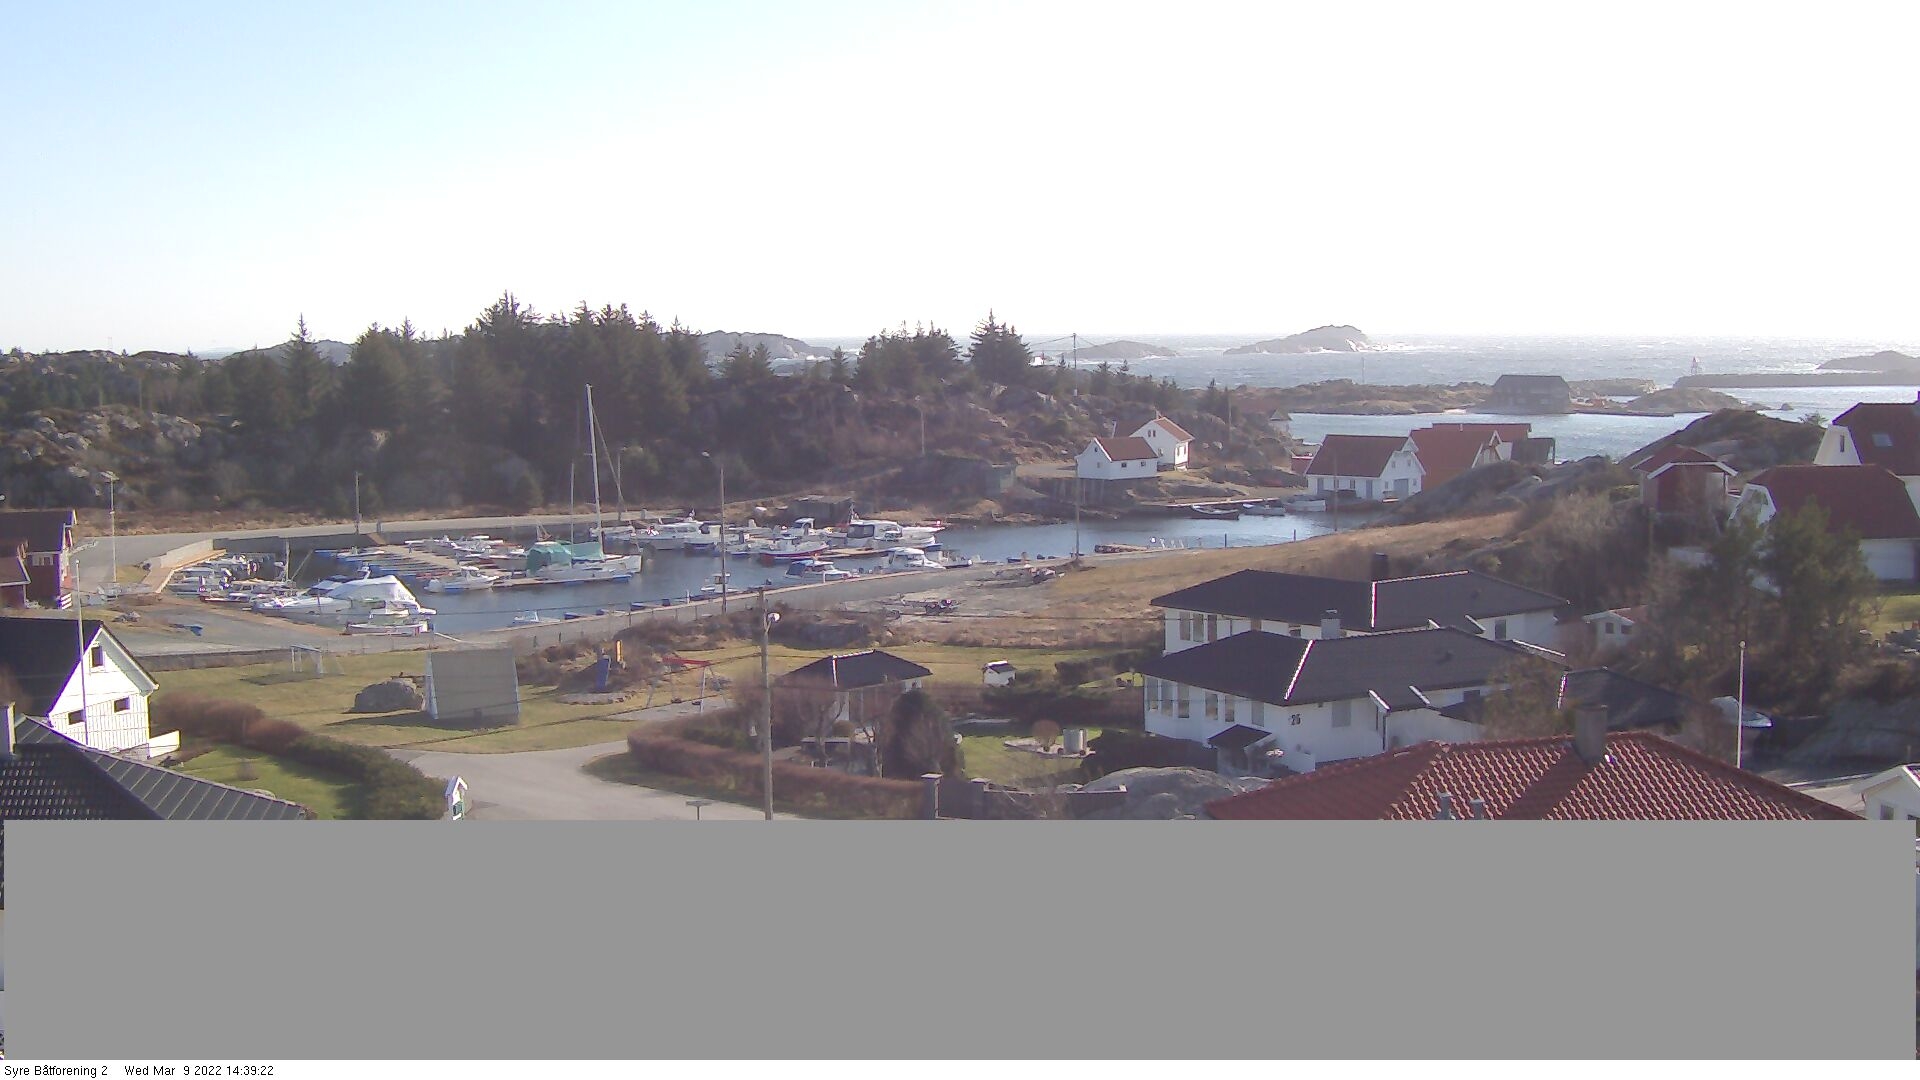 preview: Stavanger ip camera